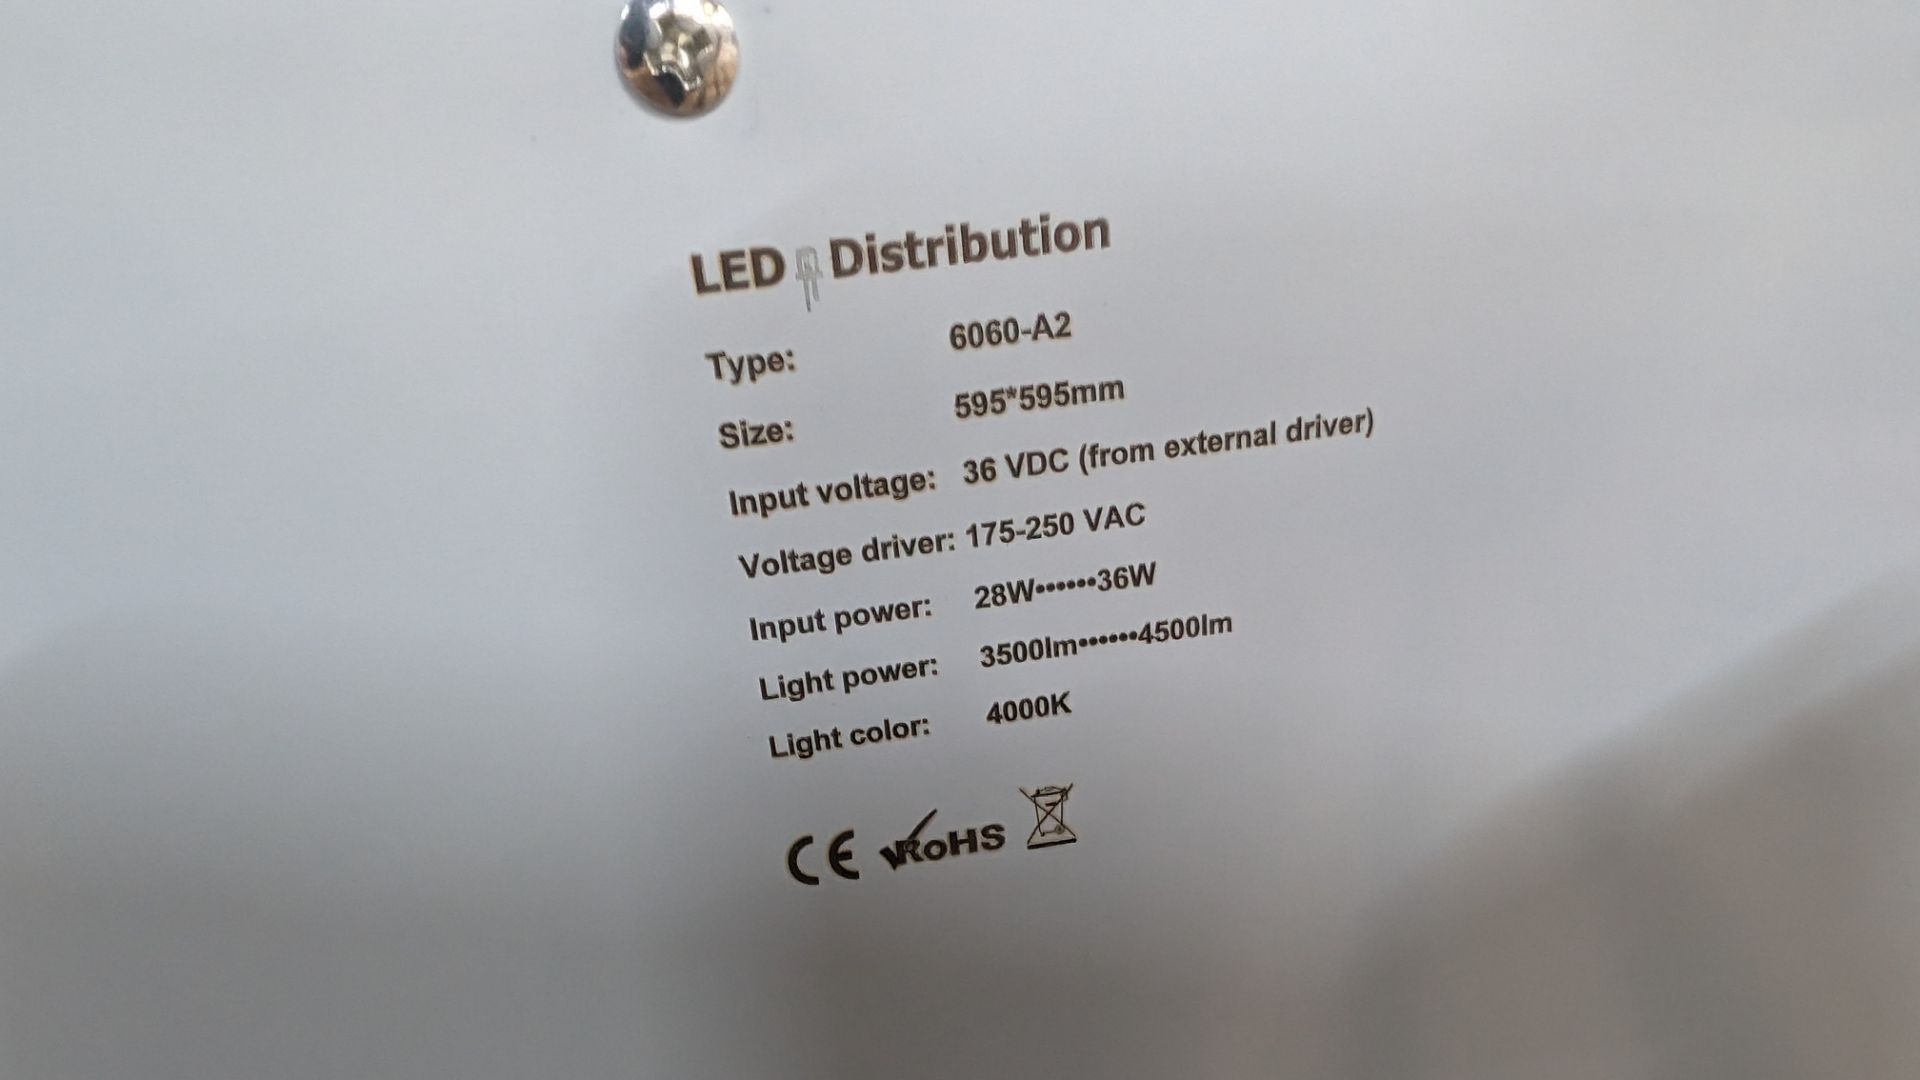 40 off Elegance Premium Eco 595mm x 595mm LED lighting panels. 4000k. 28/36w input power. 36w dri - Image 8 of 12